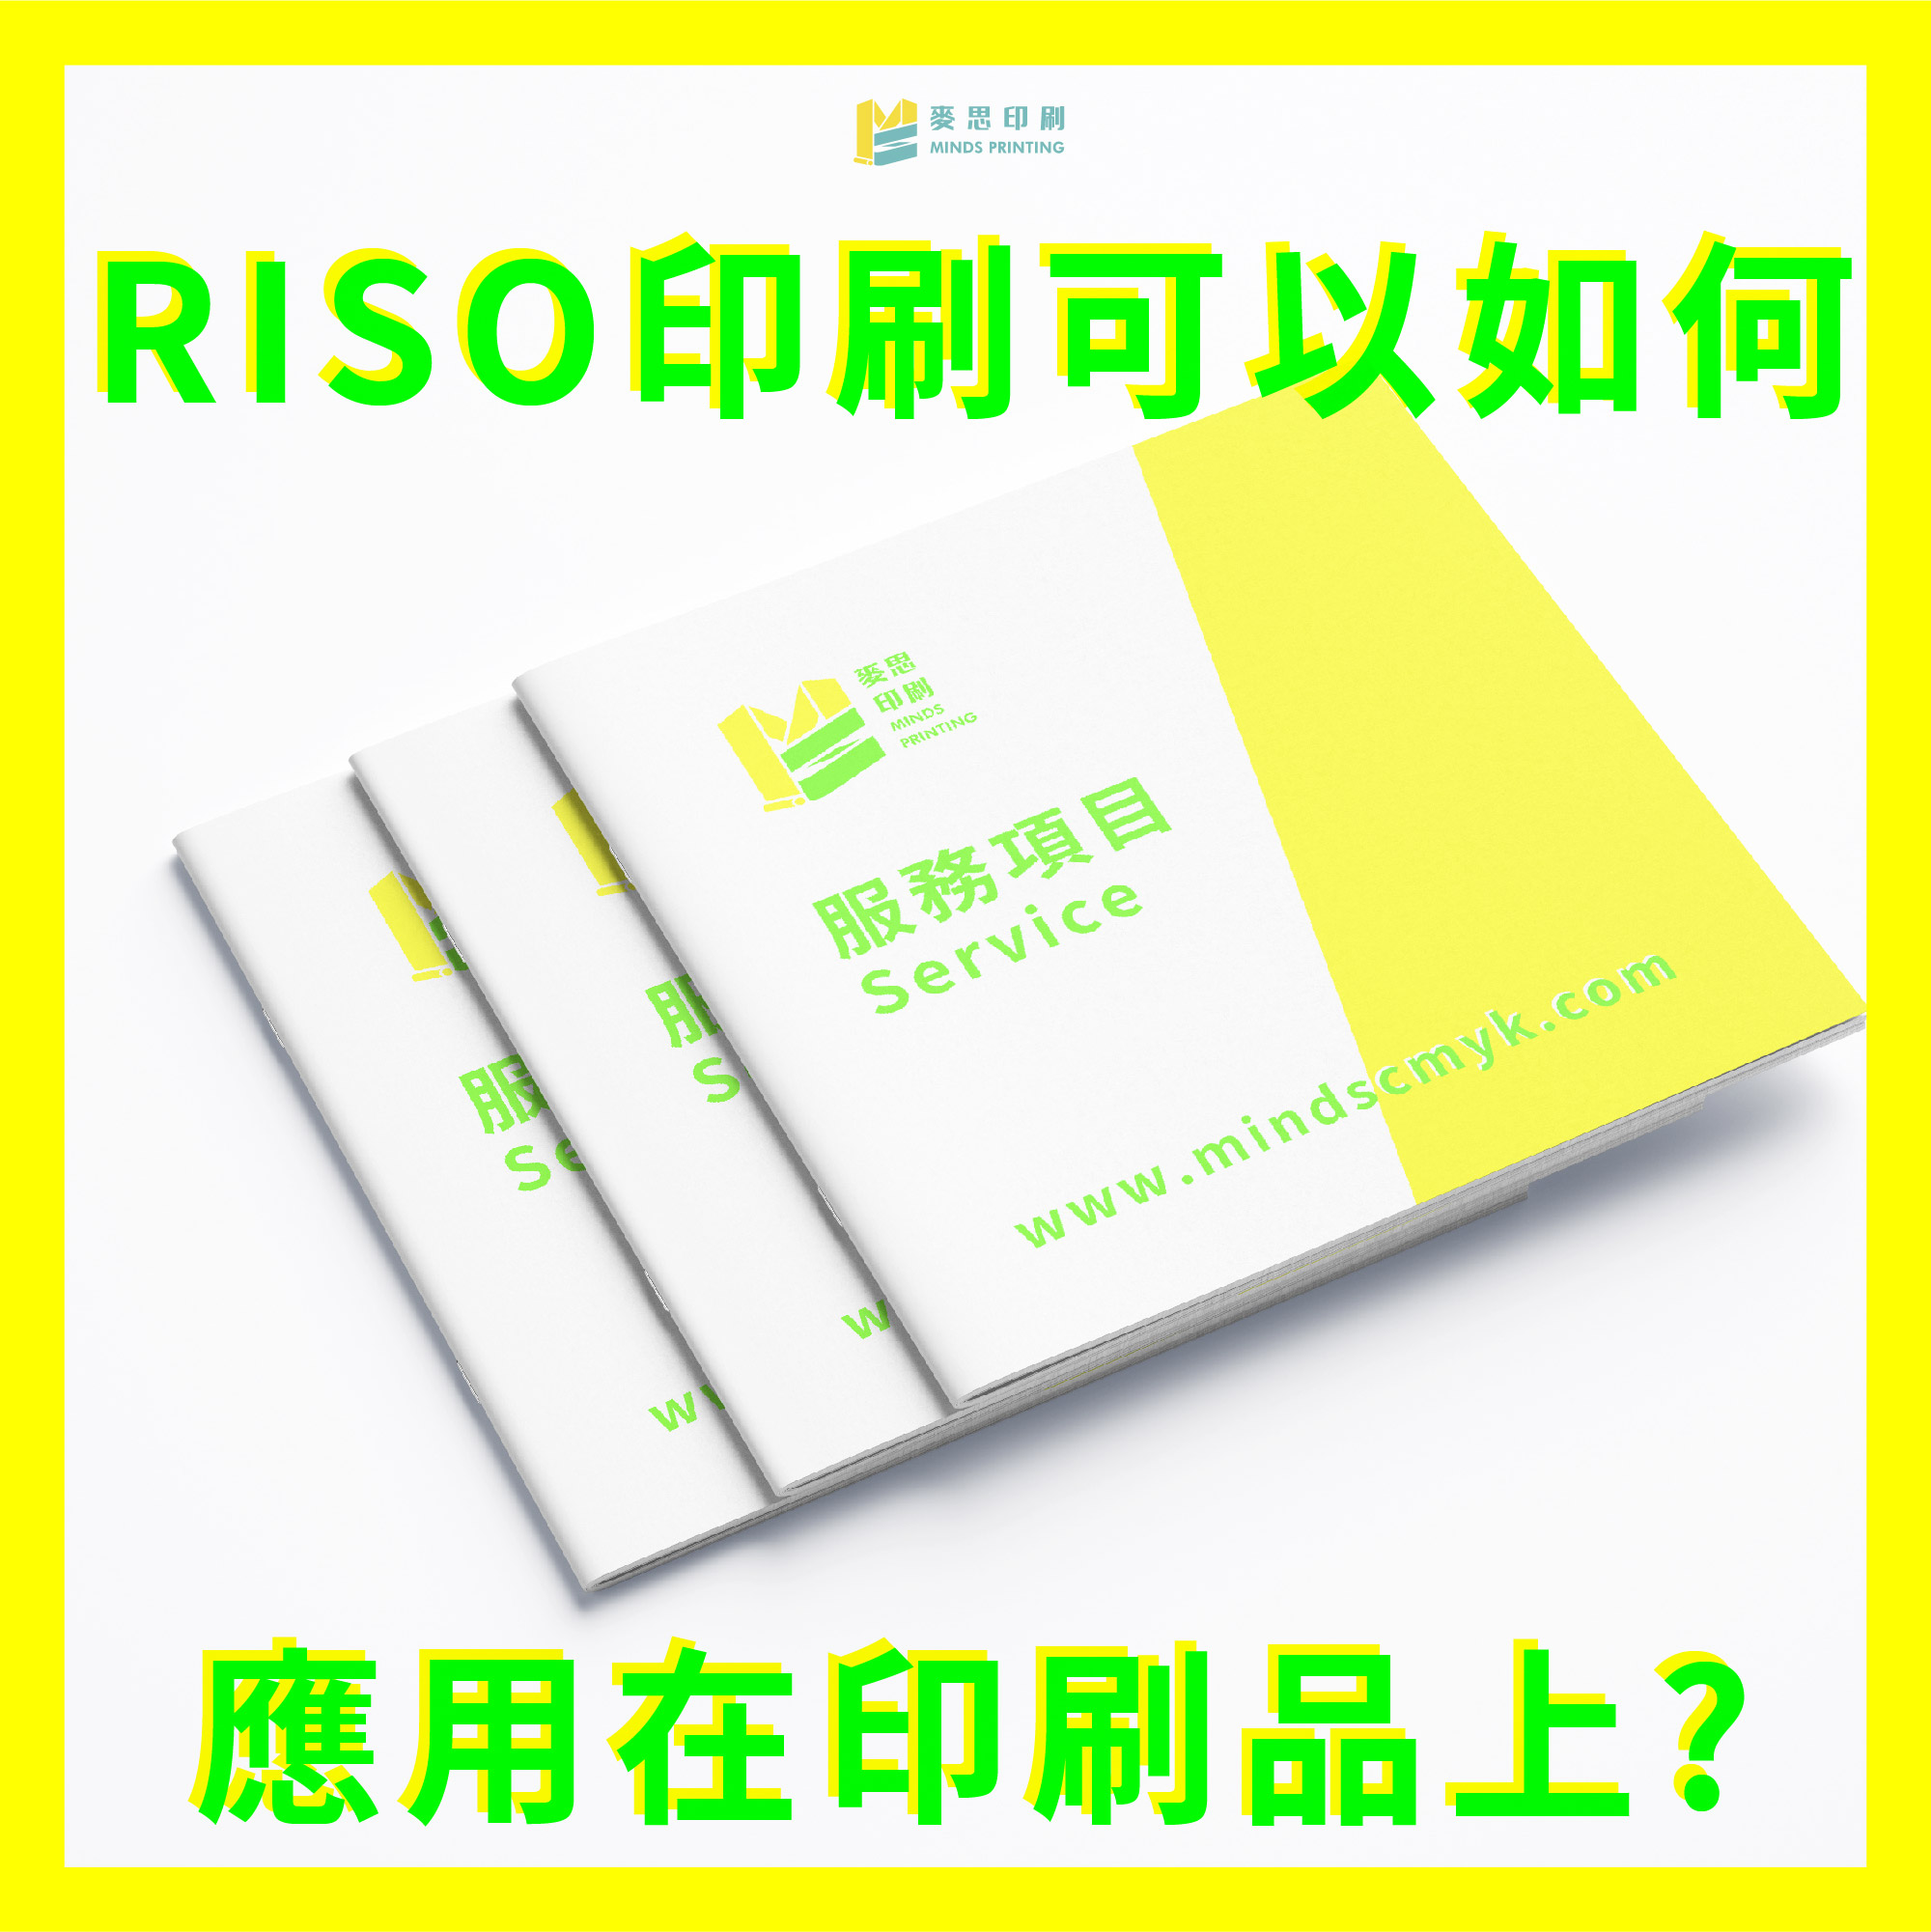 RISO印刷可以如何應用在印刷品上